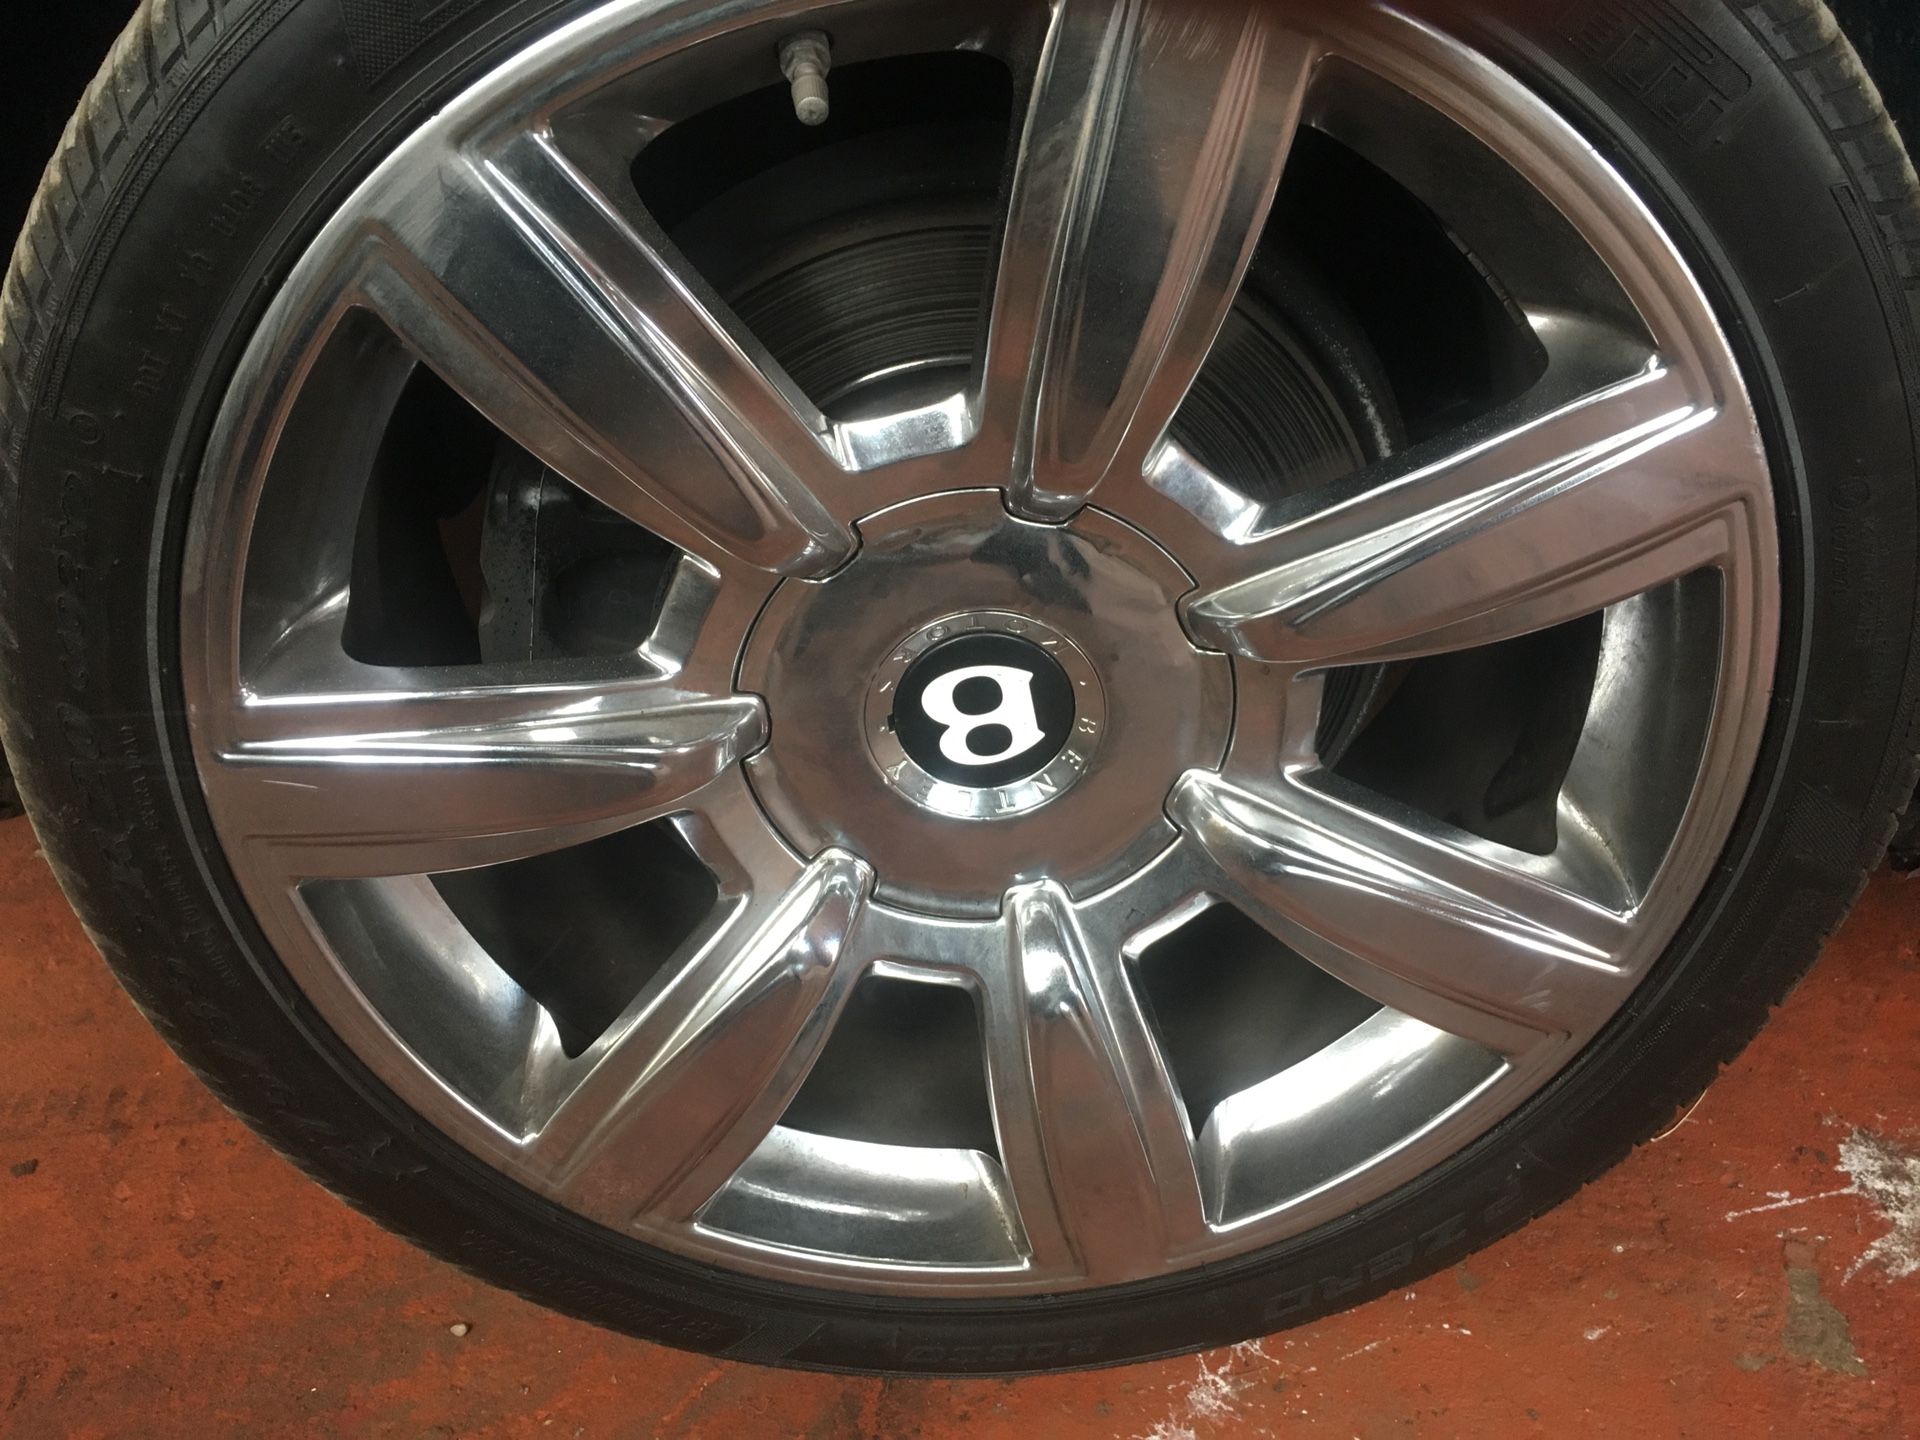 Factory Chrome 20inch Bentley Rims